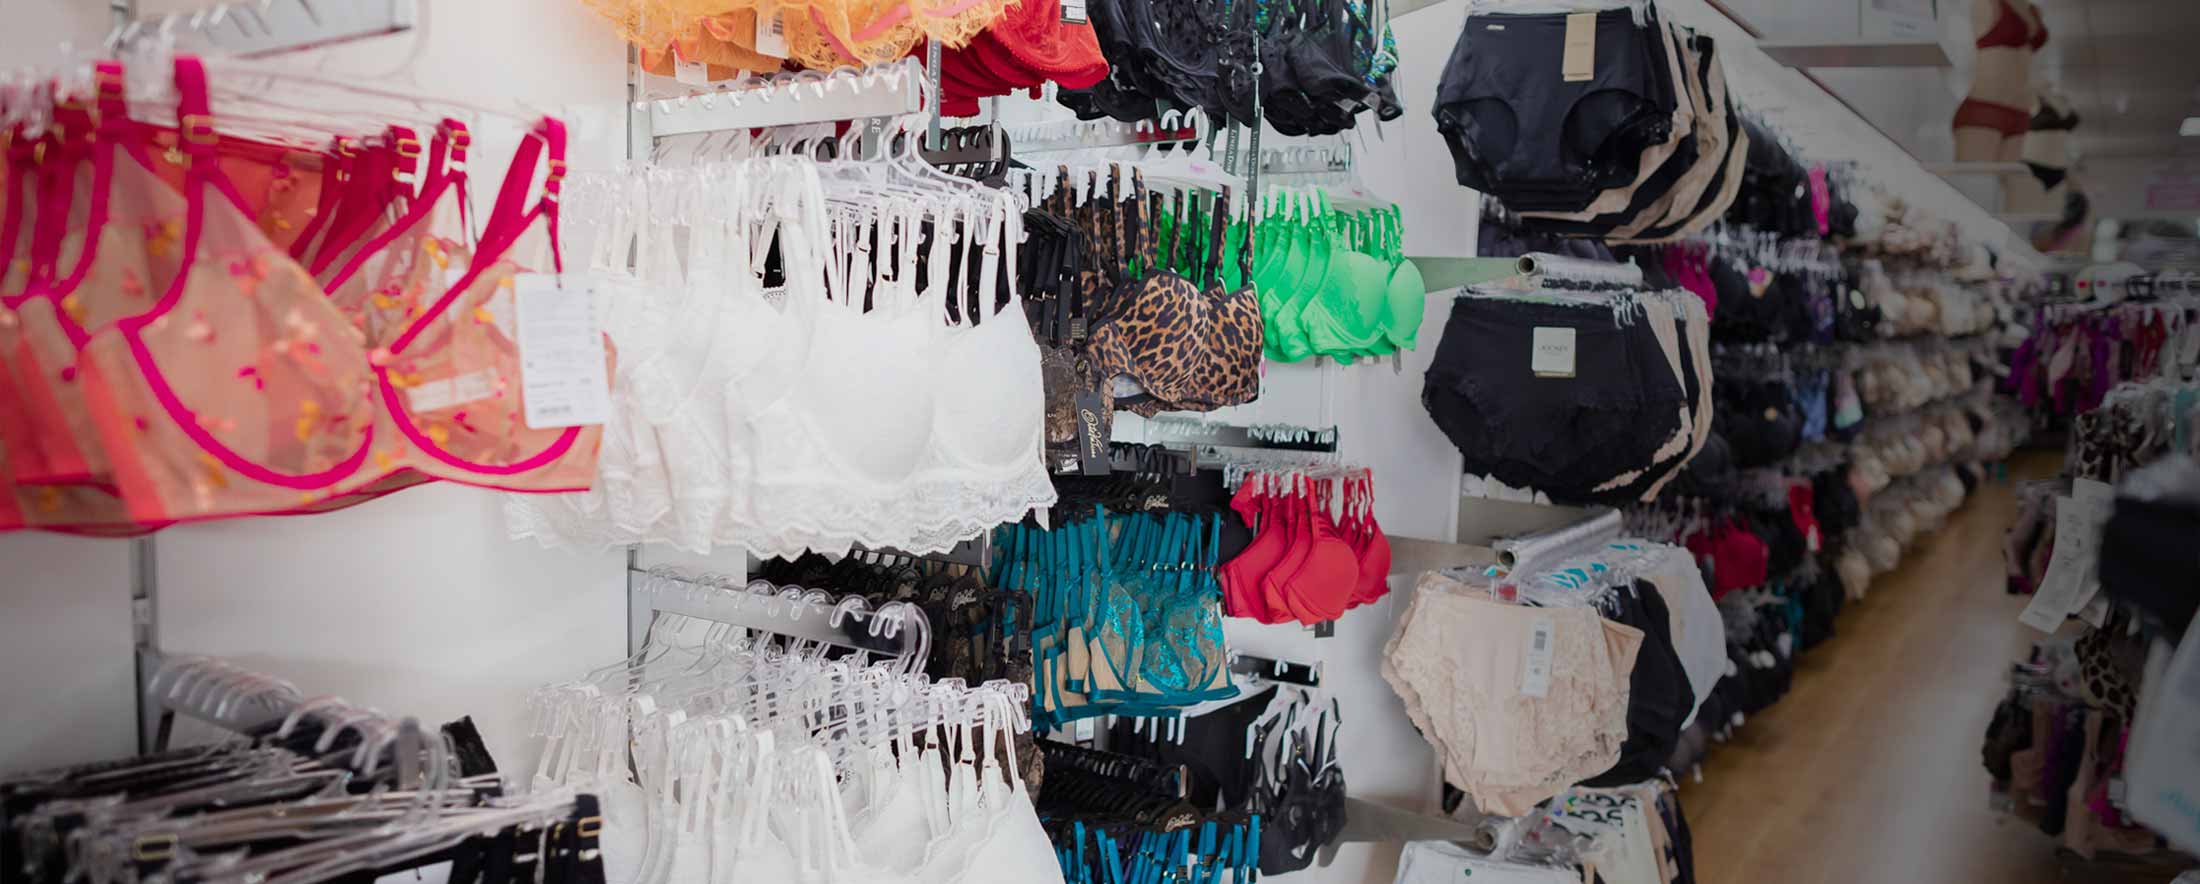 Wall of transgender underwear in retail store